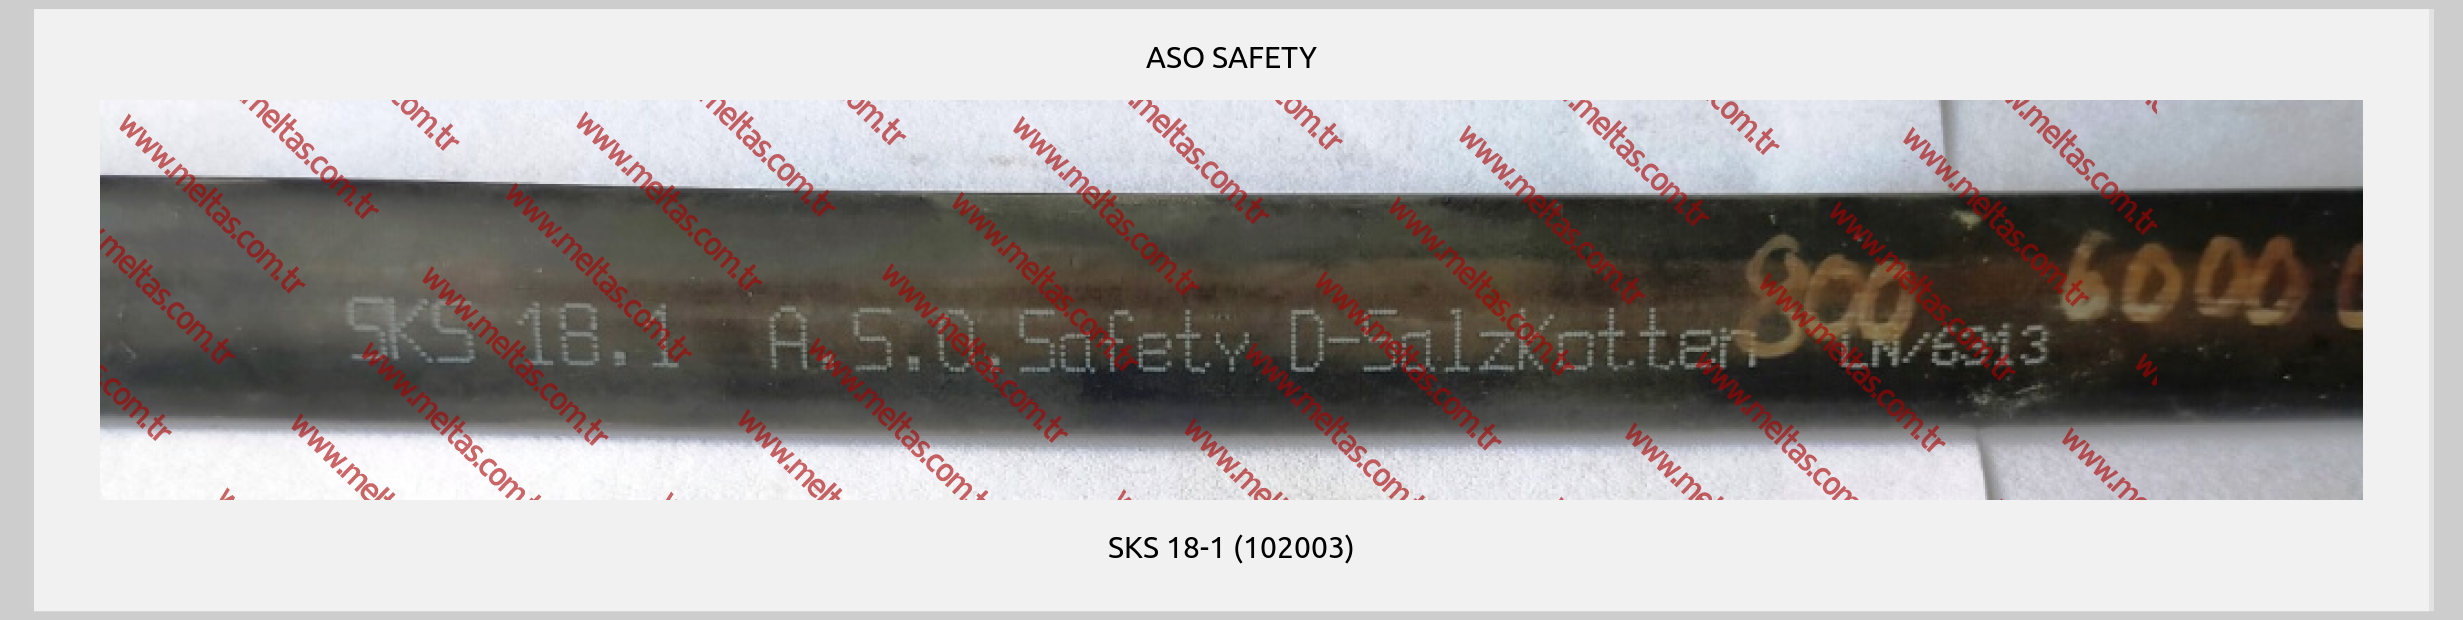 ASO SAFETY-SKS 18-1 (102003)